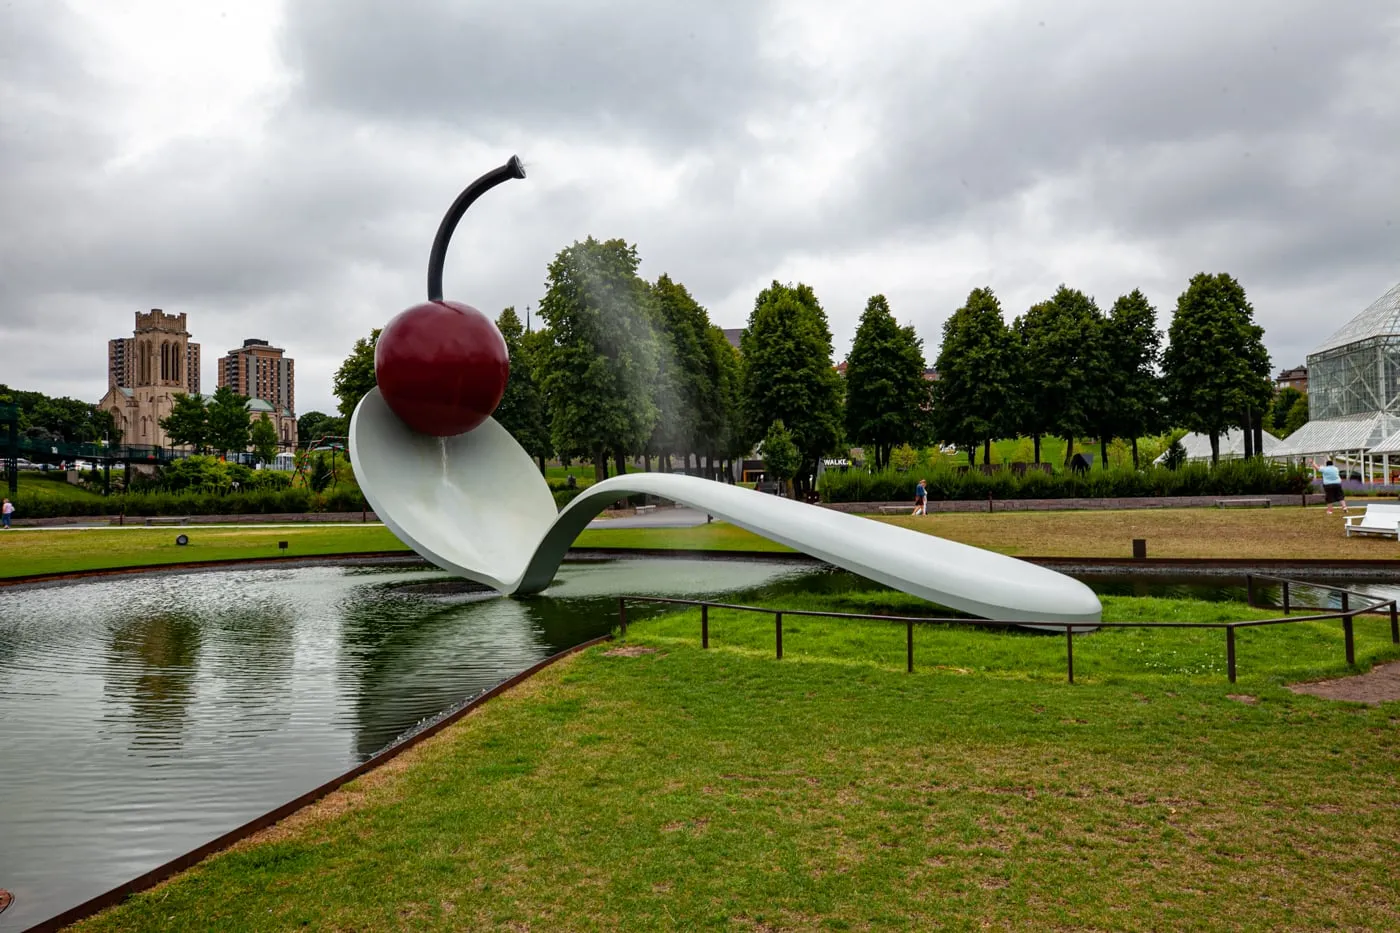 Spoonbridge and Cherry sculpture in Minneapolis, Minnesota | Giant Spoon and Cherry Roadside Attraction at Minneapolis Sculpture Garden in Minnesota